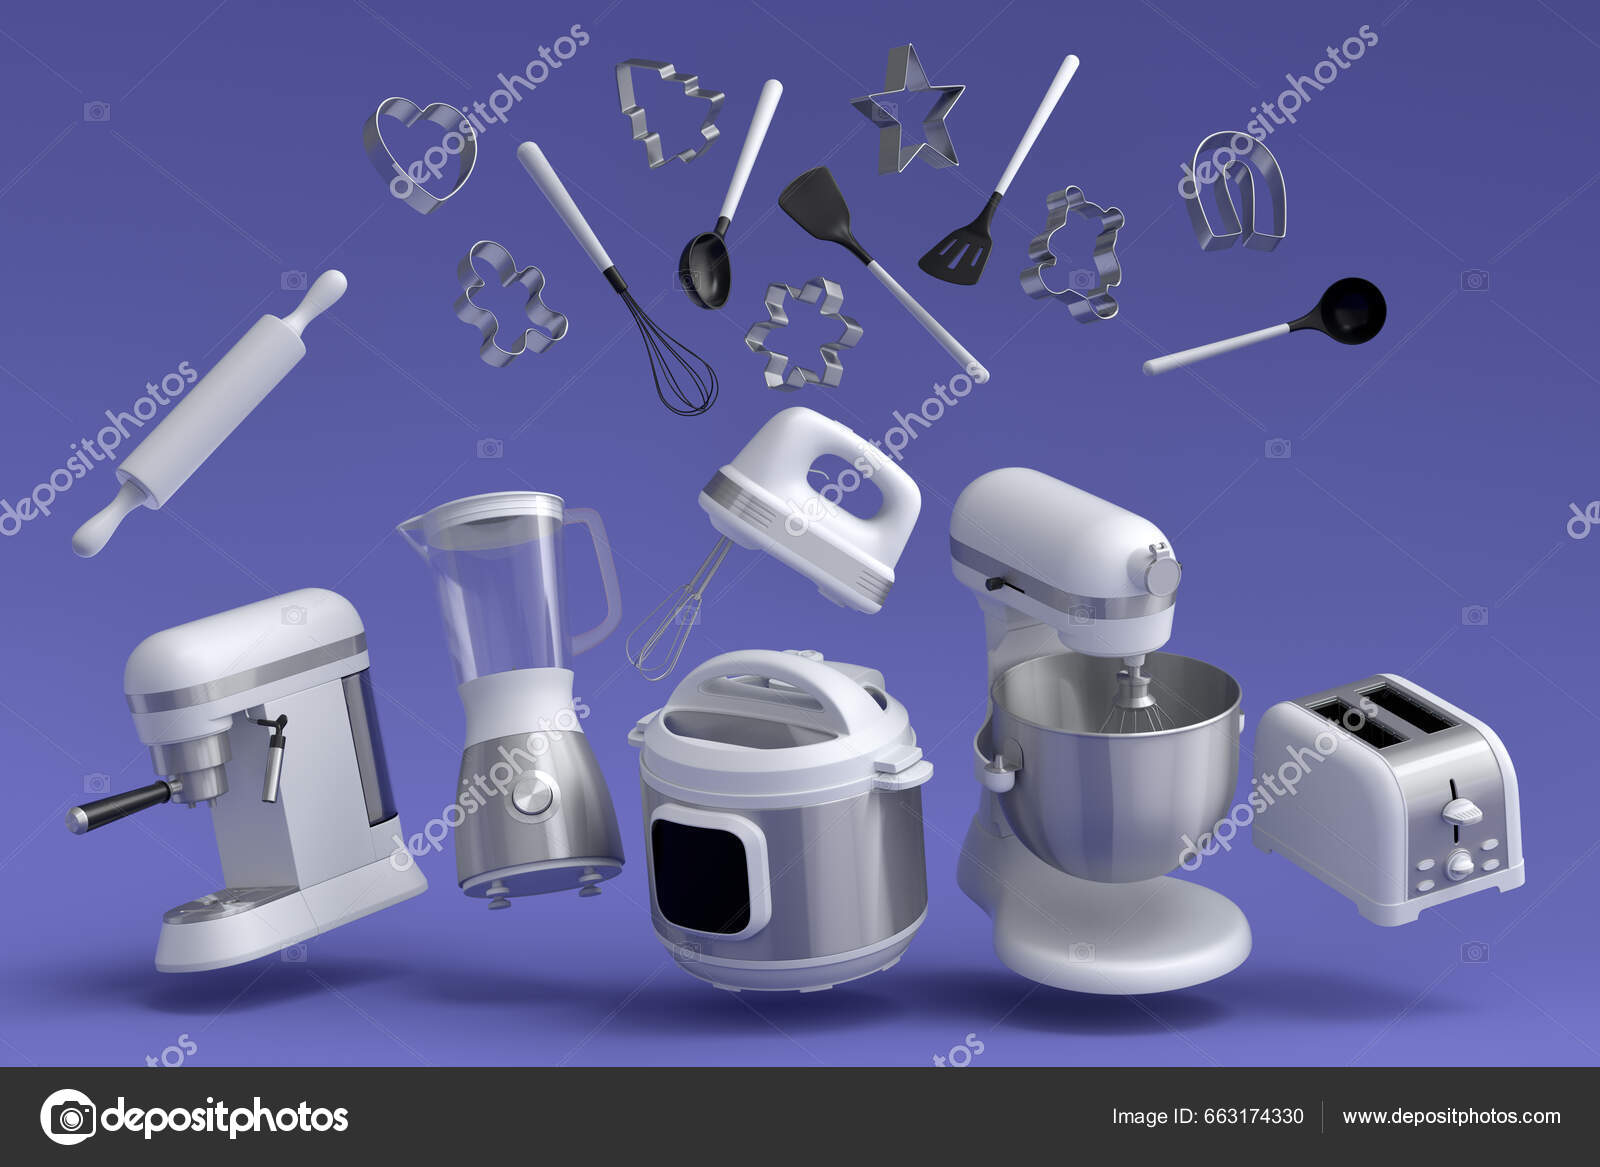 https://st5.depositphotos.com/1616053/66317/i/1600/depositphotos_663174330-stock-photo-electric-kitchen-appliances-utensils-making.jpg